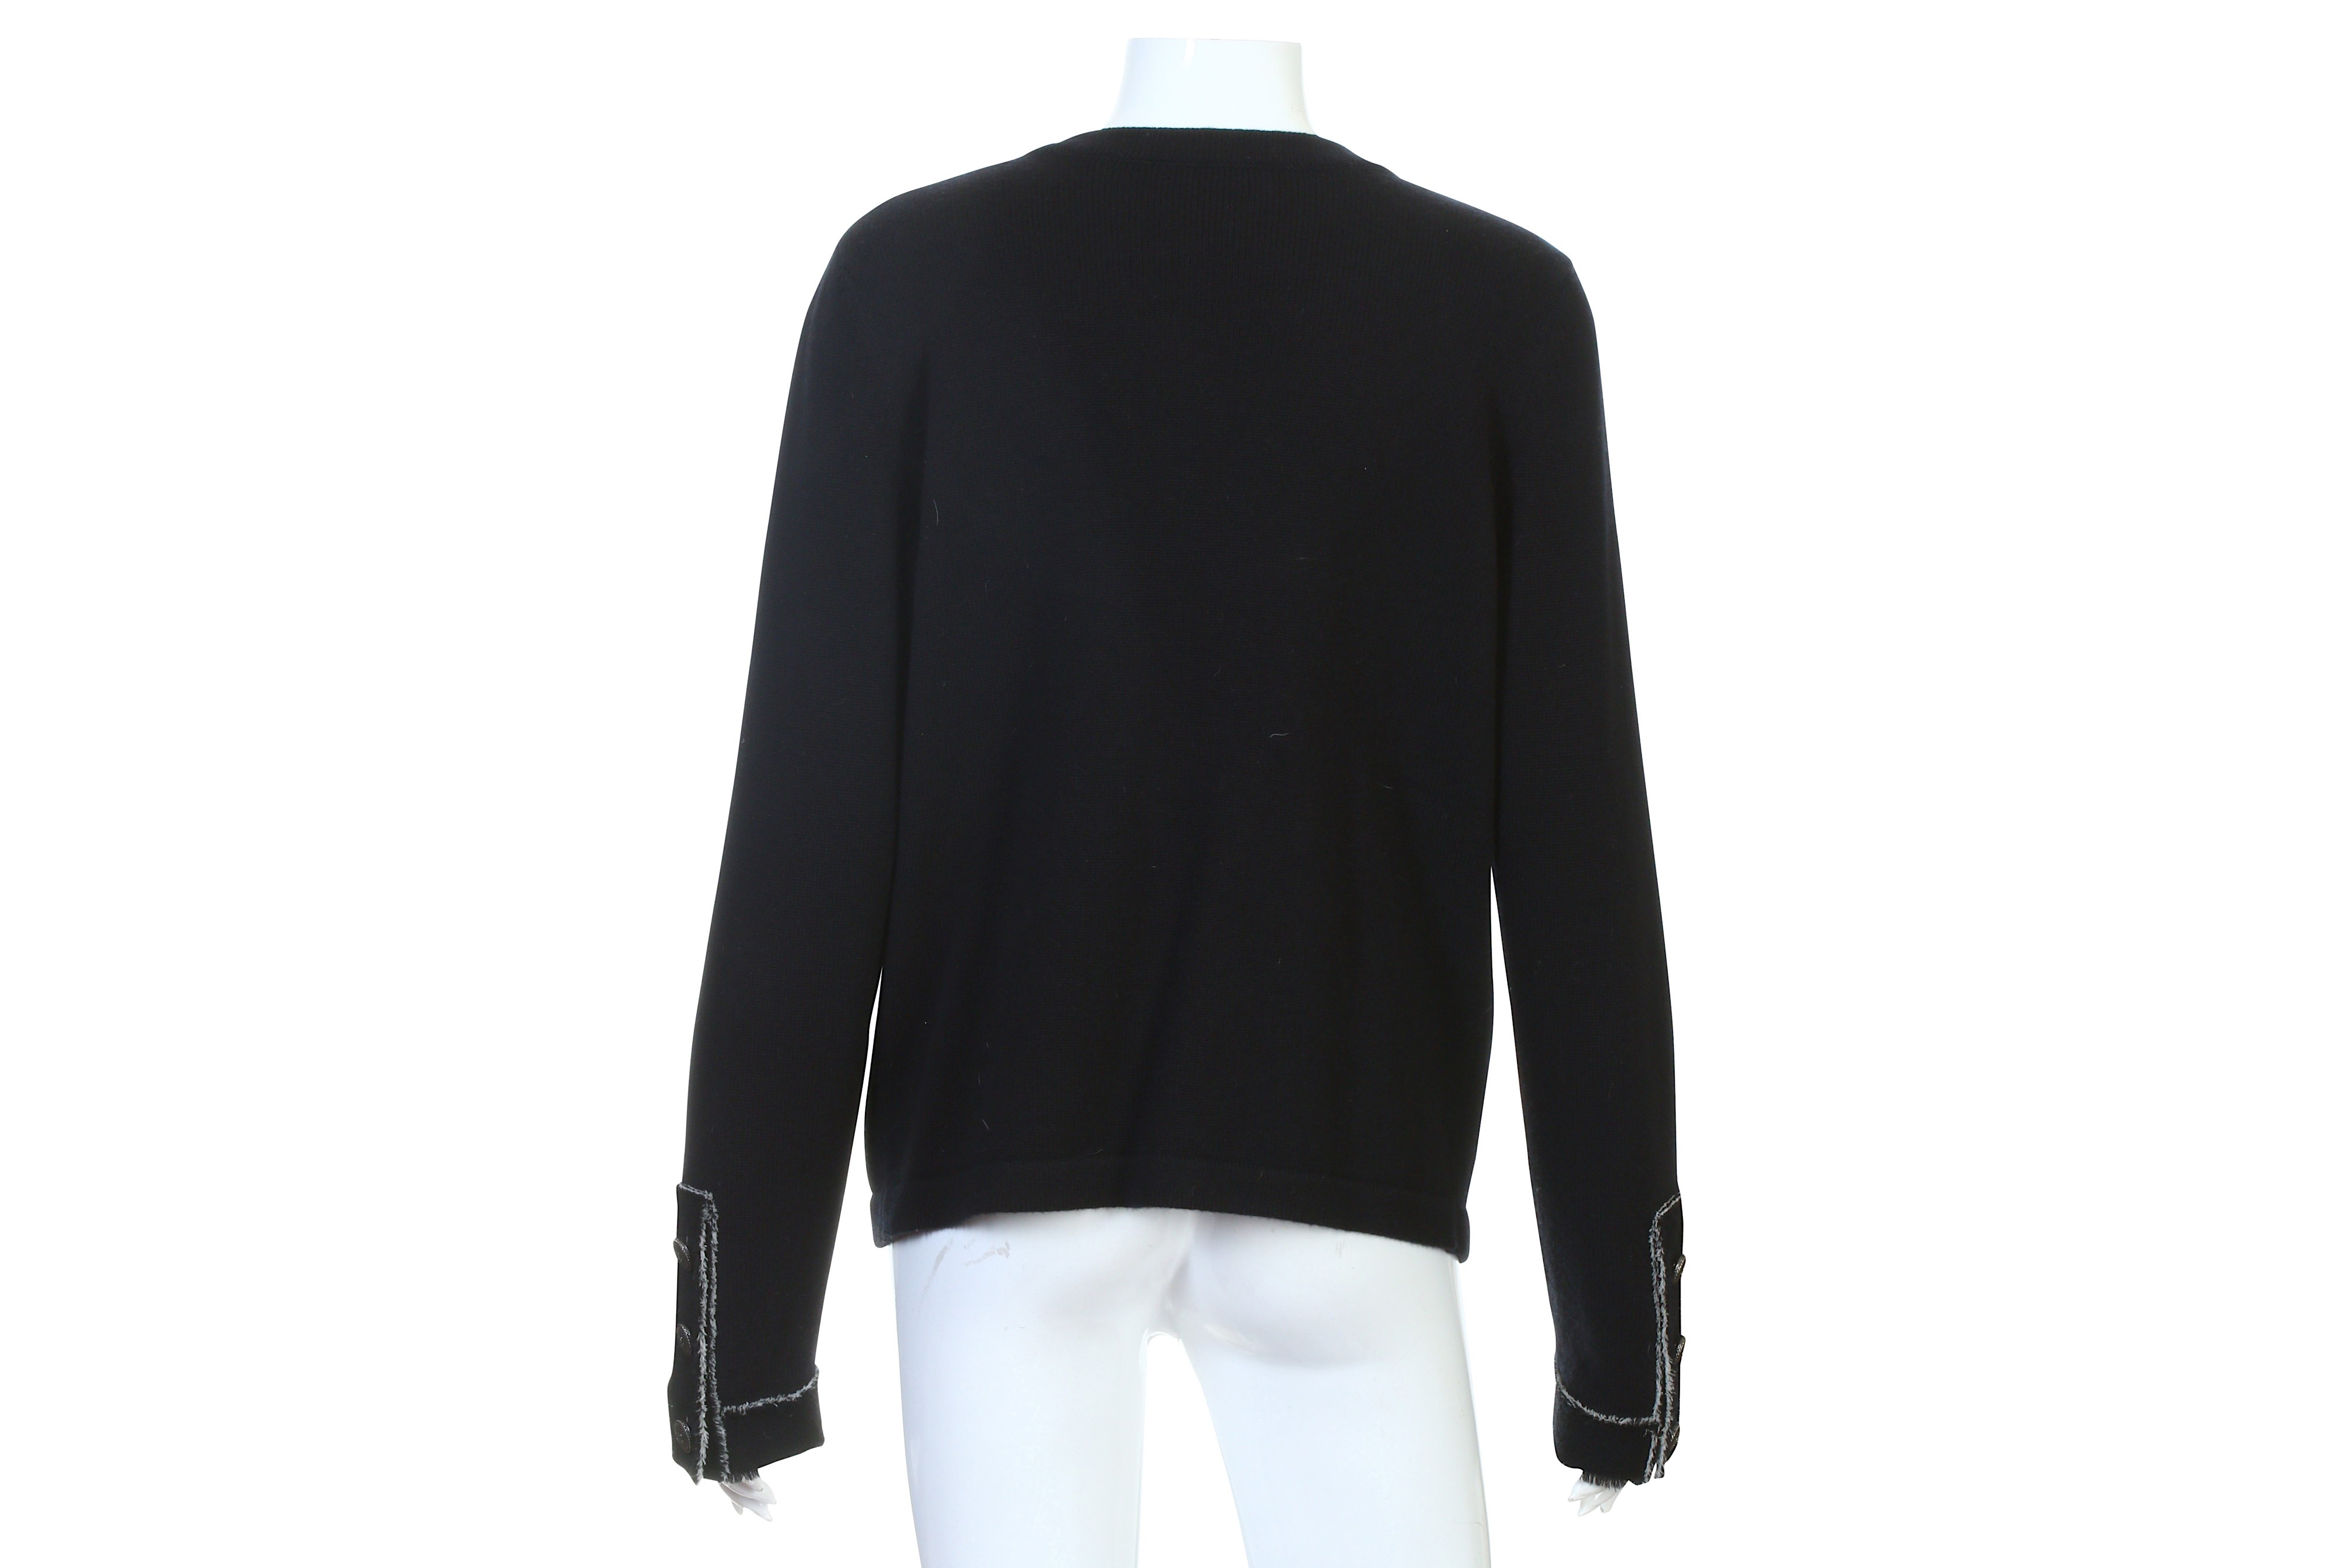 Chanel Black Cashmere Cardigan - Image 3 of 7